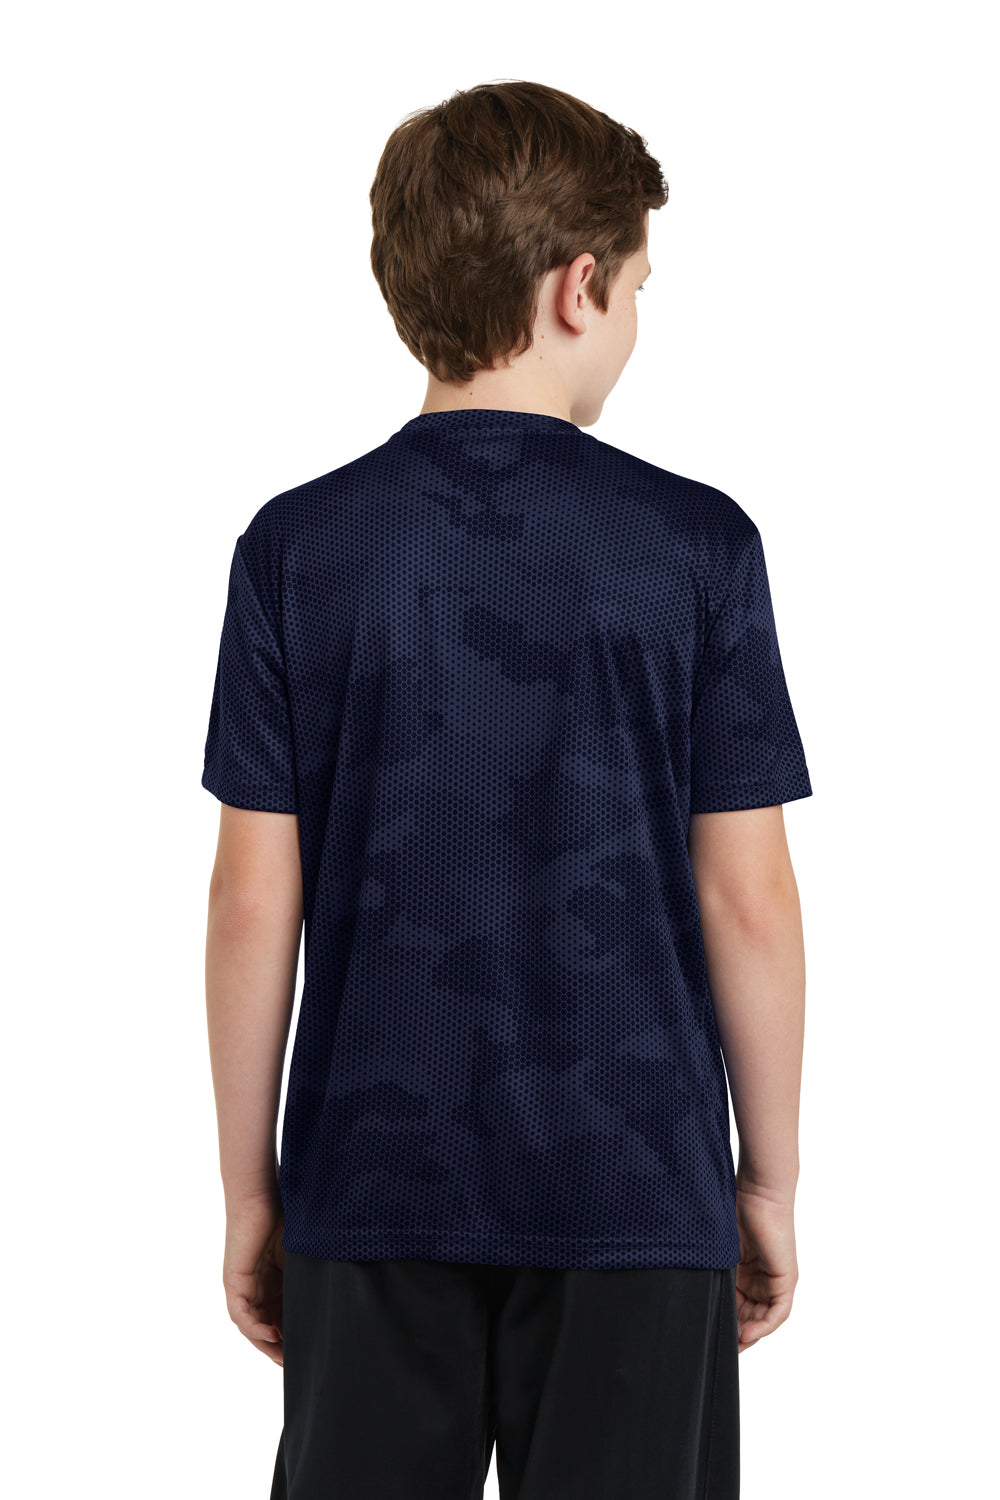 Sport-Tek YST370 Youth CamoHex Moisture Wicking Short Sleeve Crewneck T-Shirt Navy Blue Back